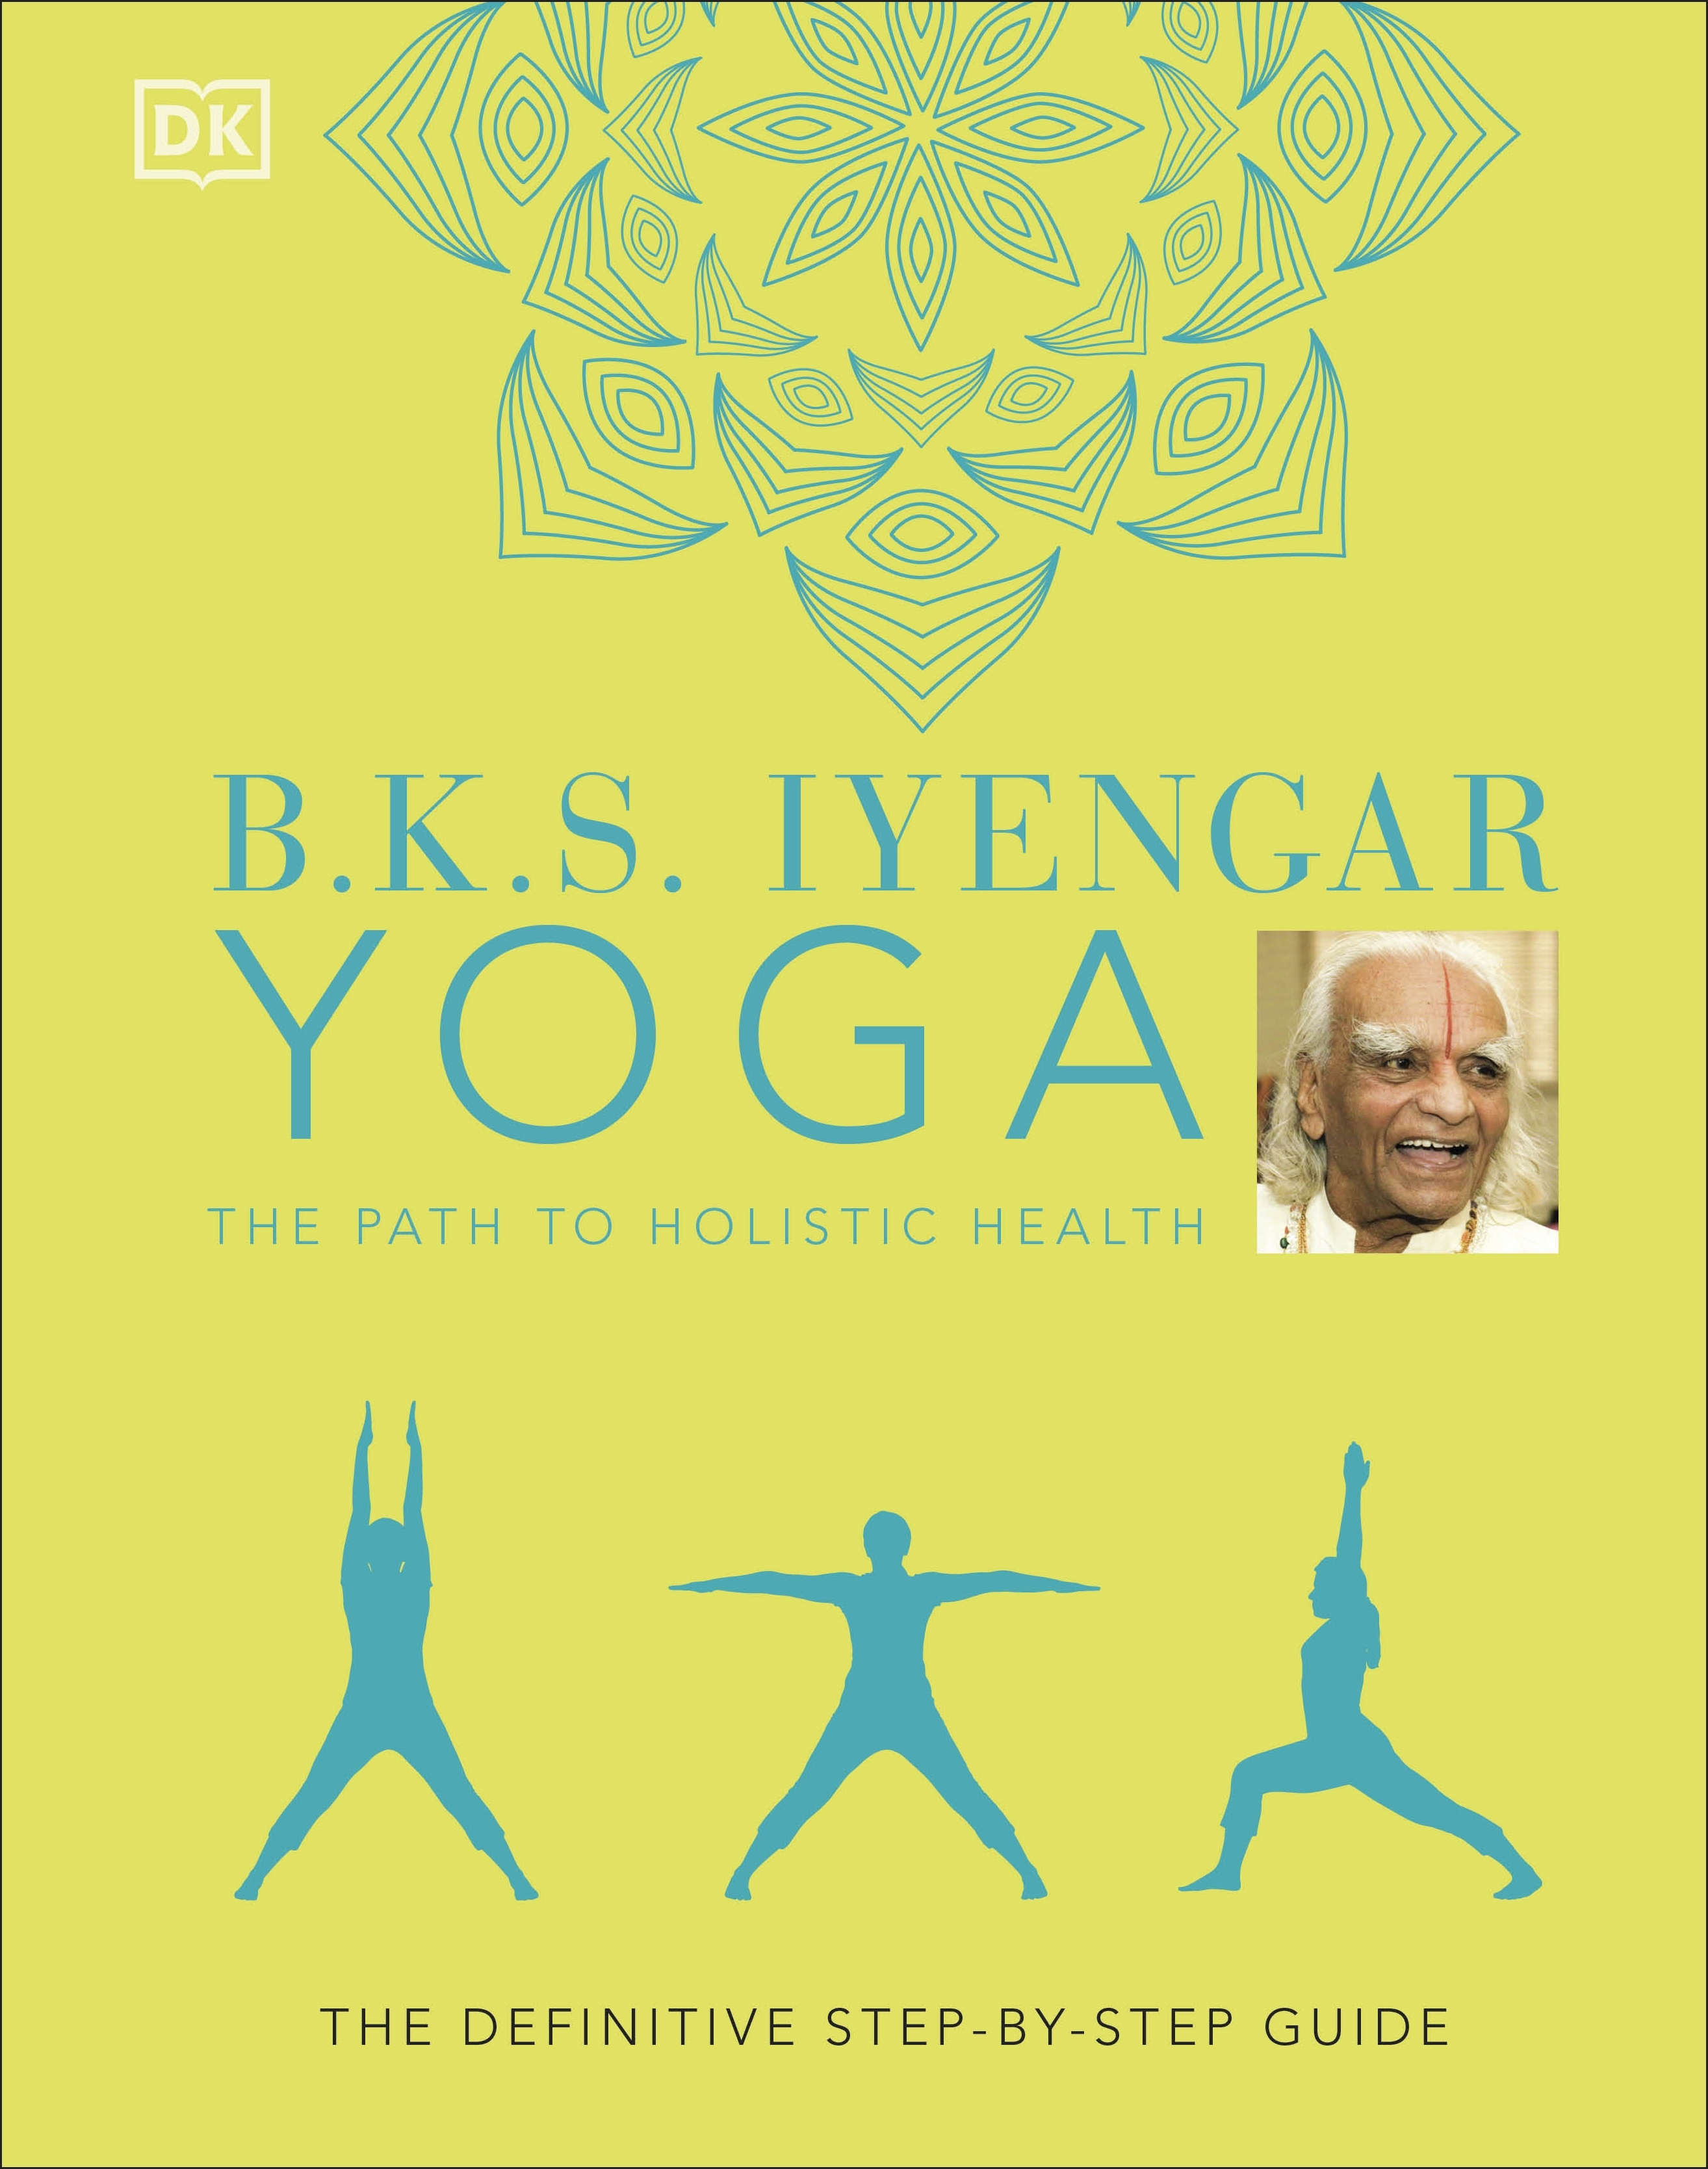 B.K.S. Iyengar Yoga The Path to Holistic Health by B.K.S. Iyengar